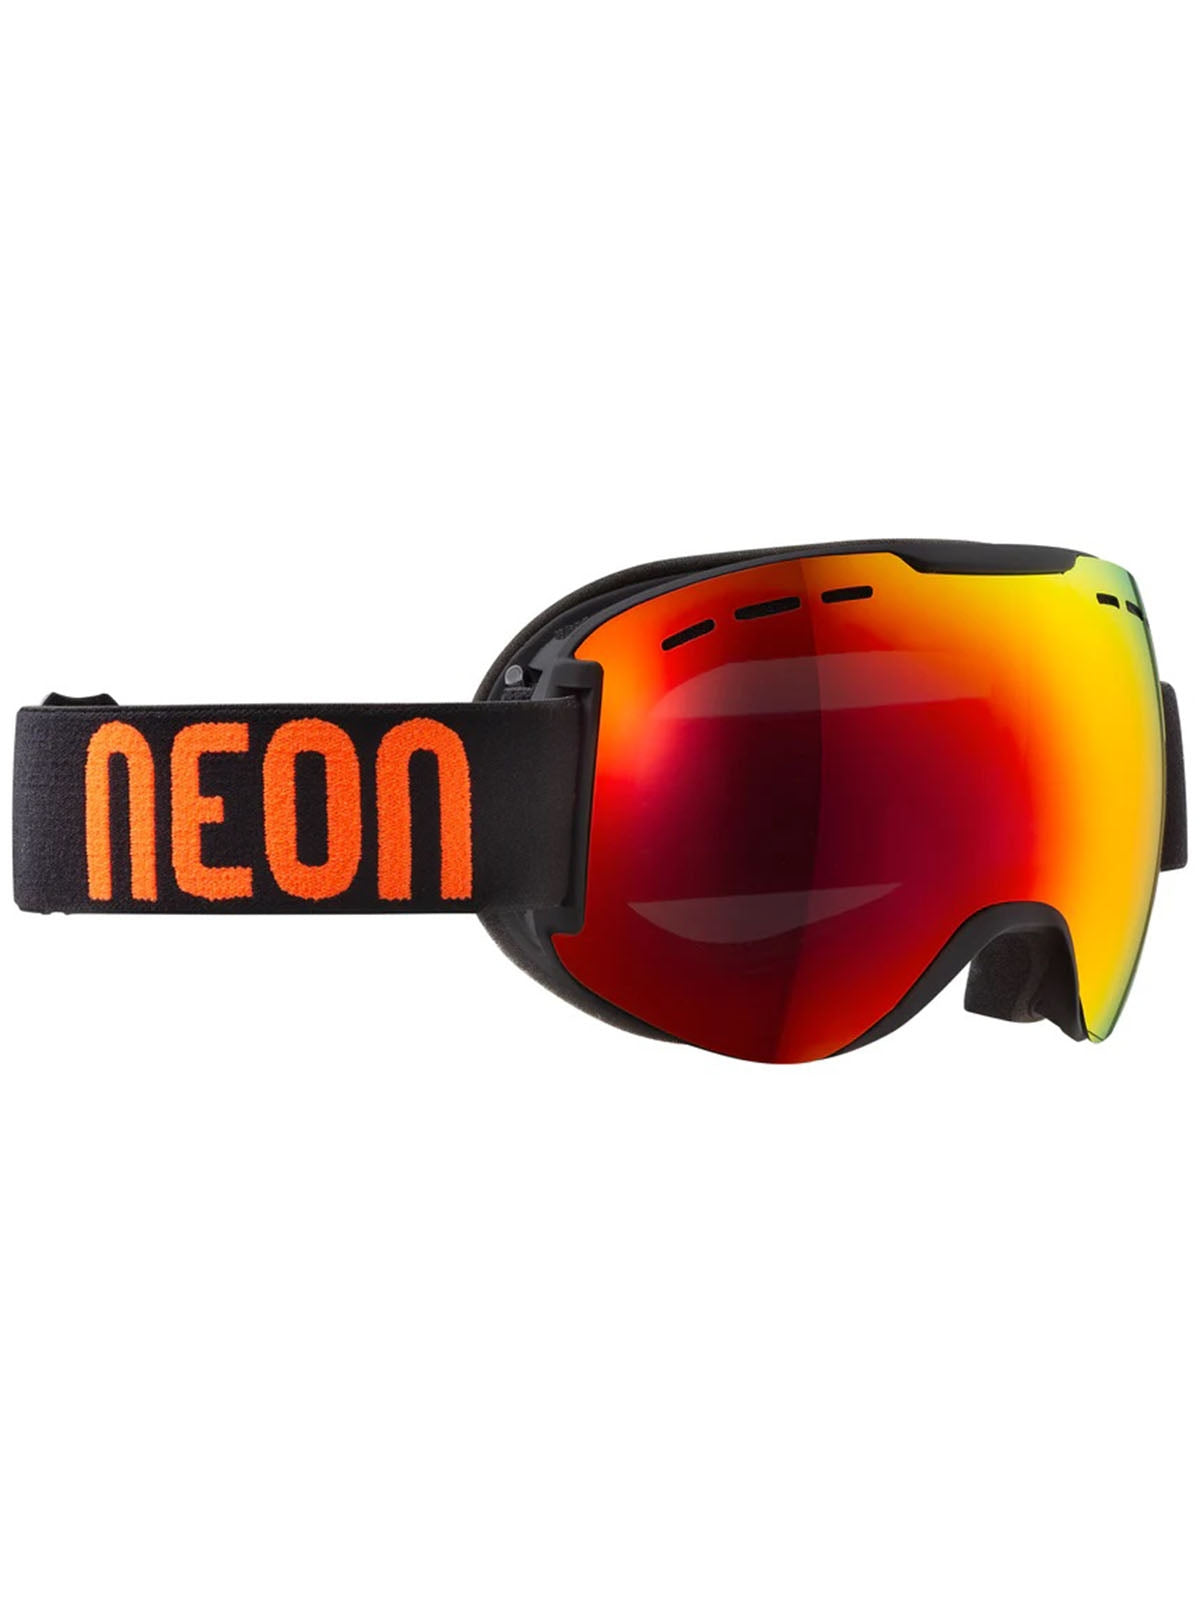 Maschere Unisex Neon - Maschera Dragon - Arancione